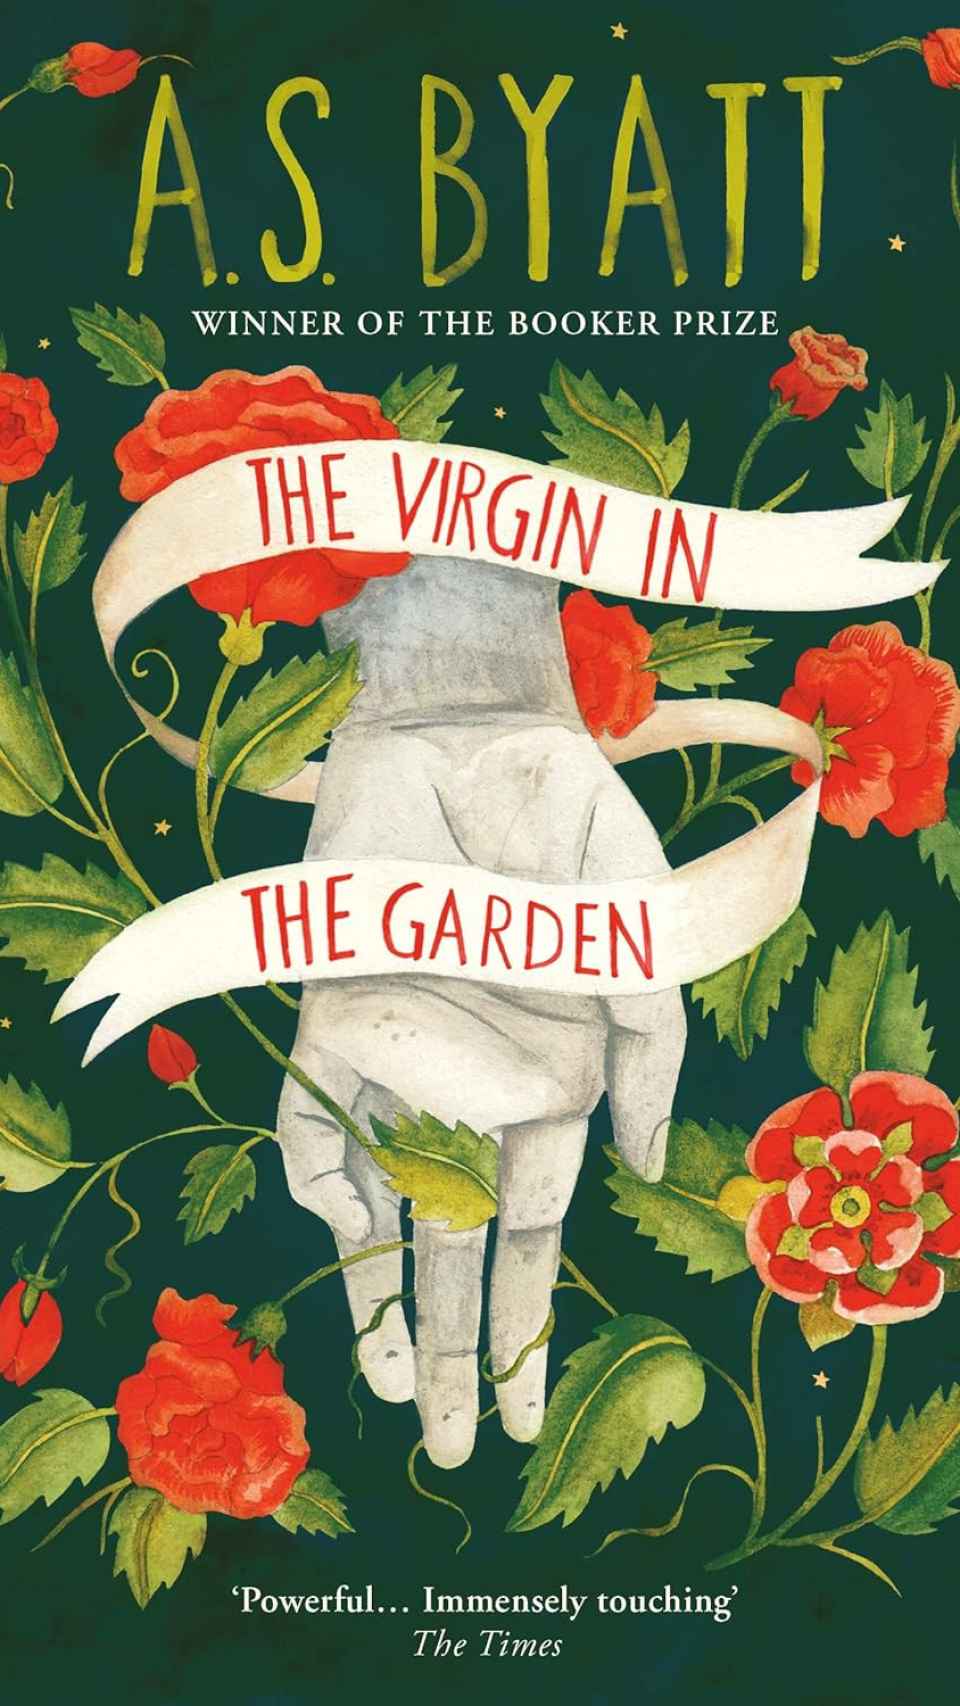 'The Virgin in the garden